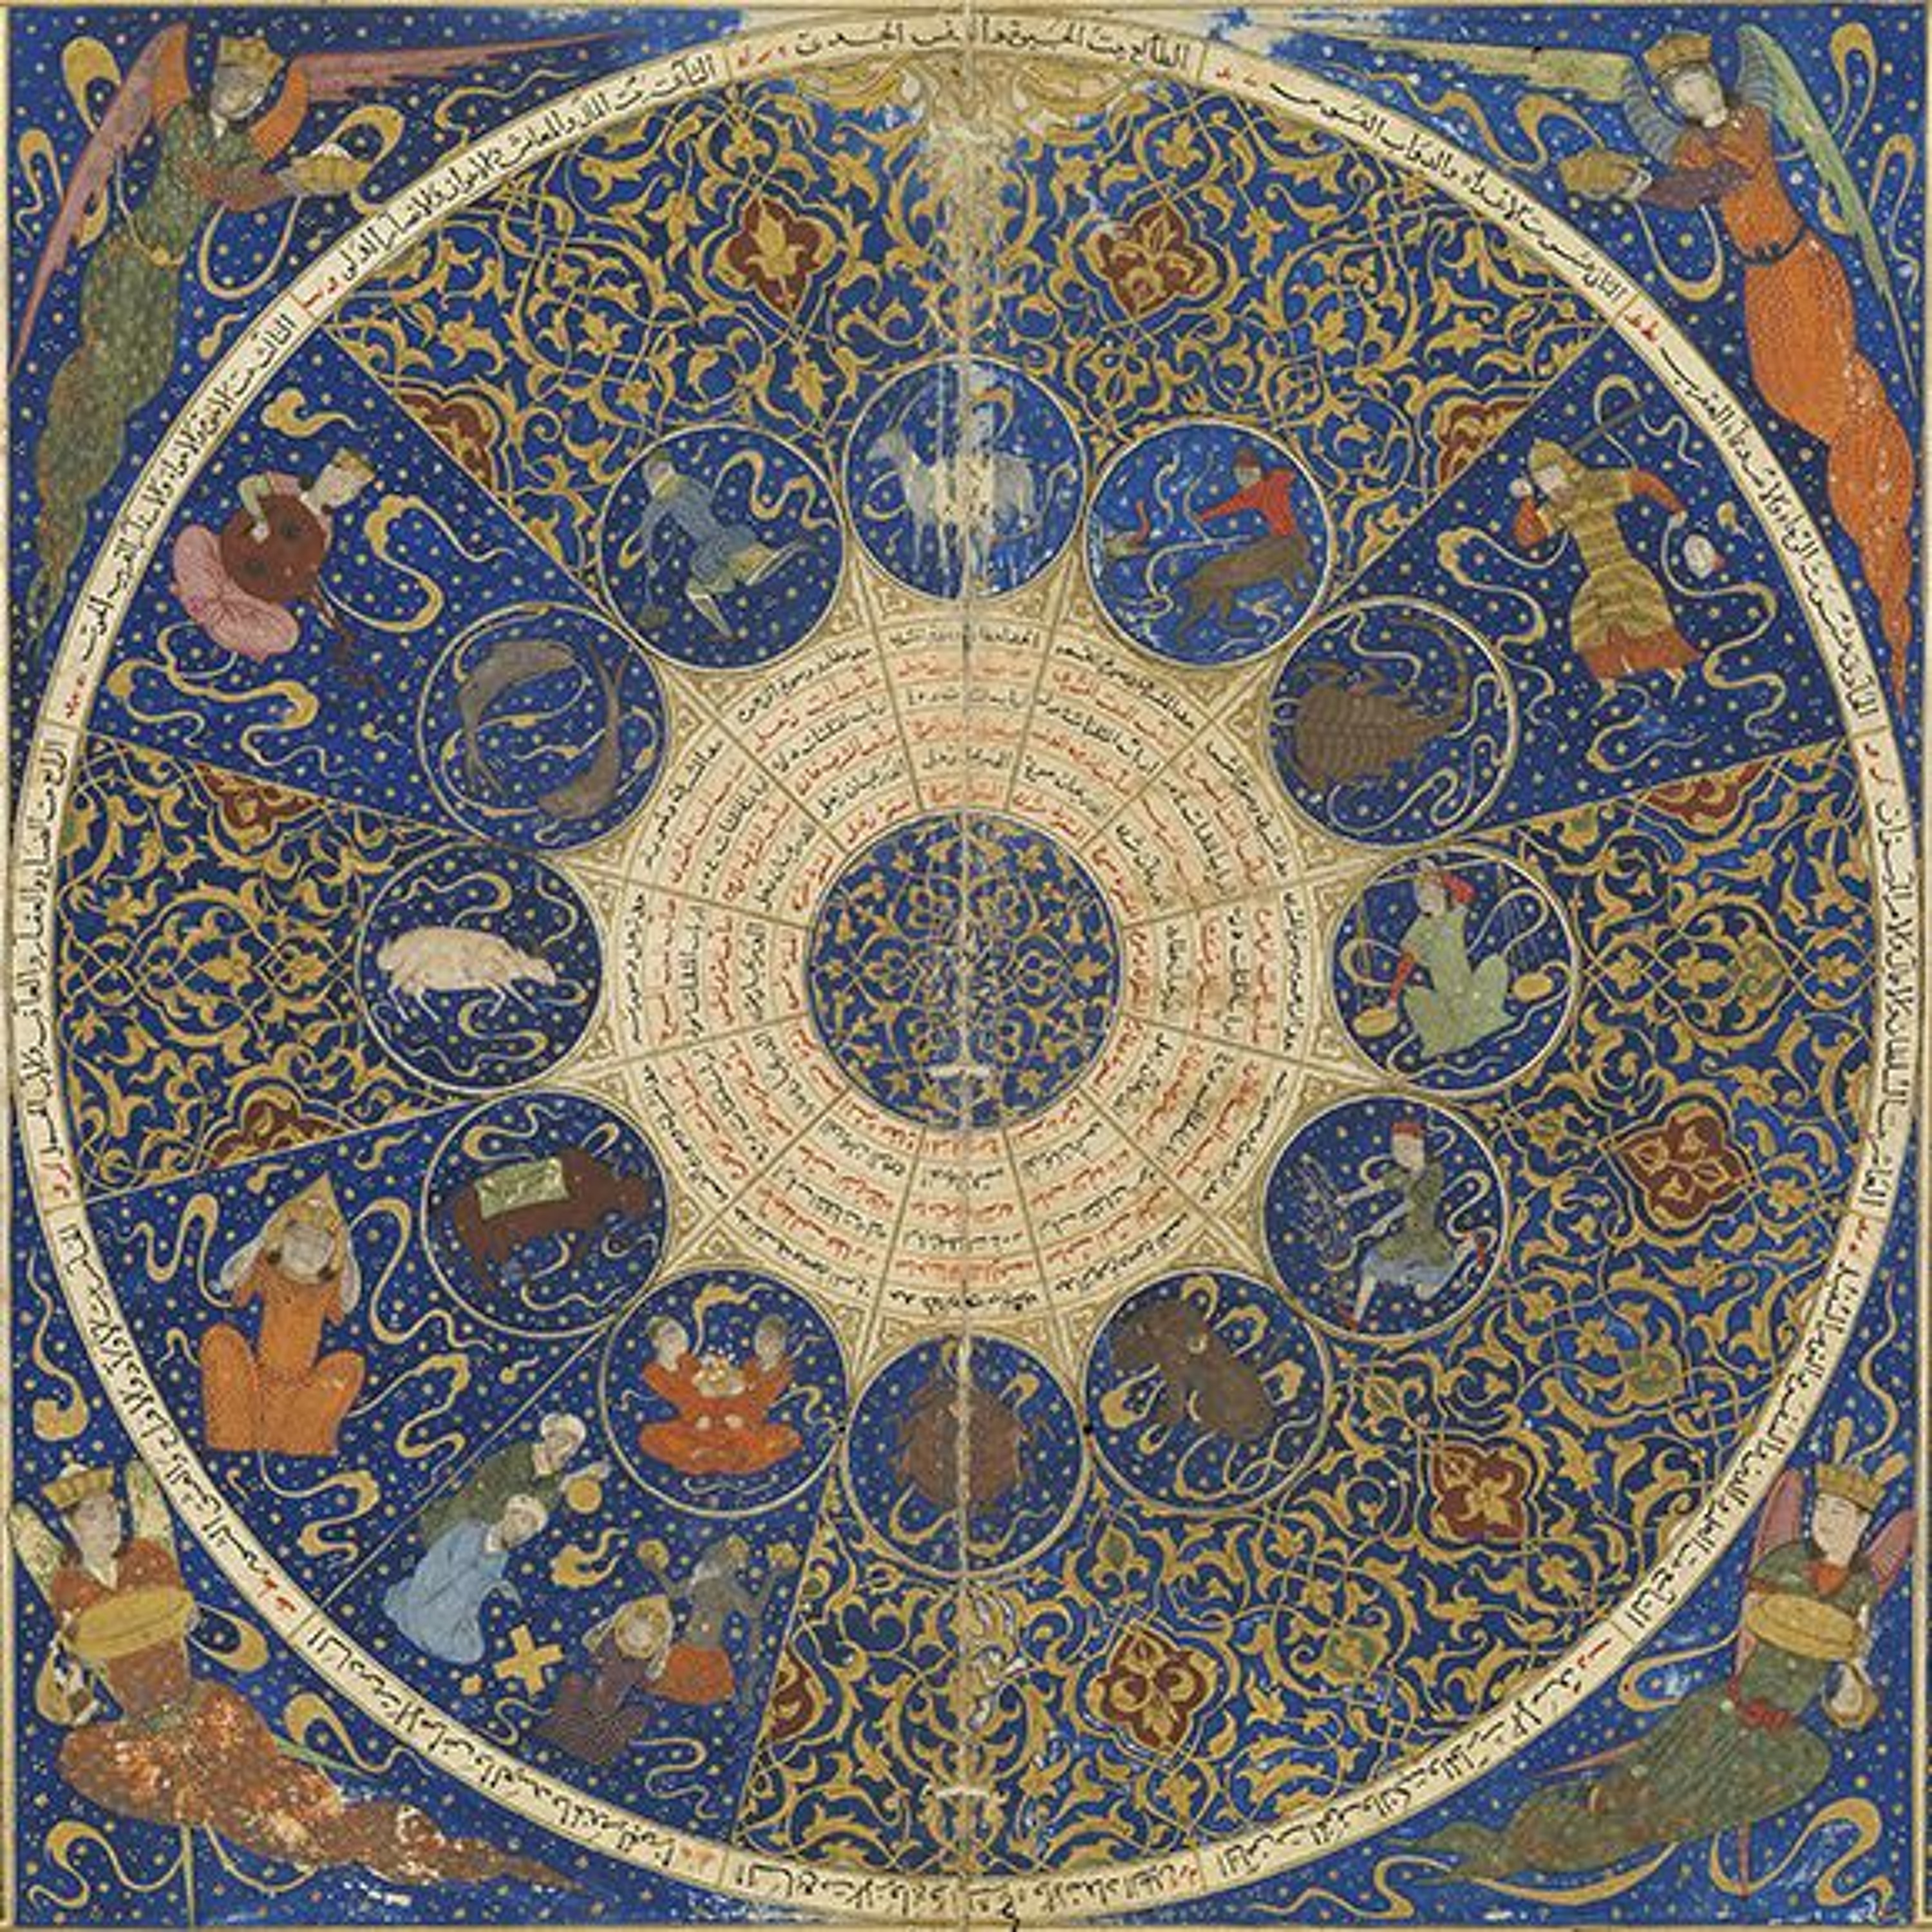 TEASER -- Myth of the Month 14: Astrology